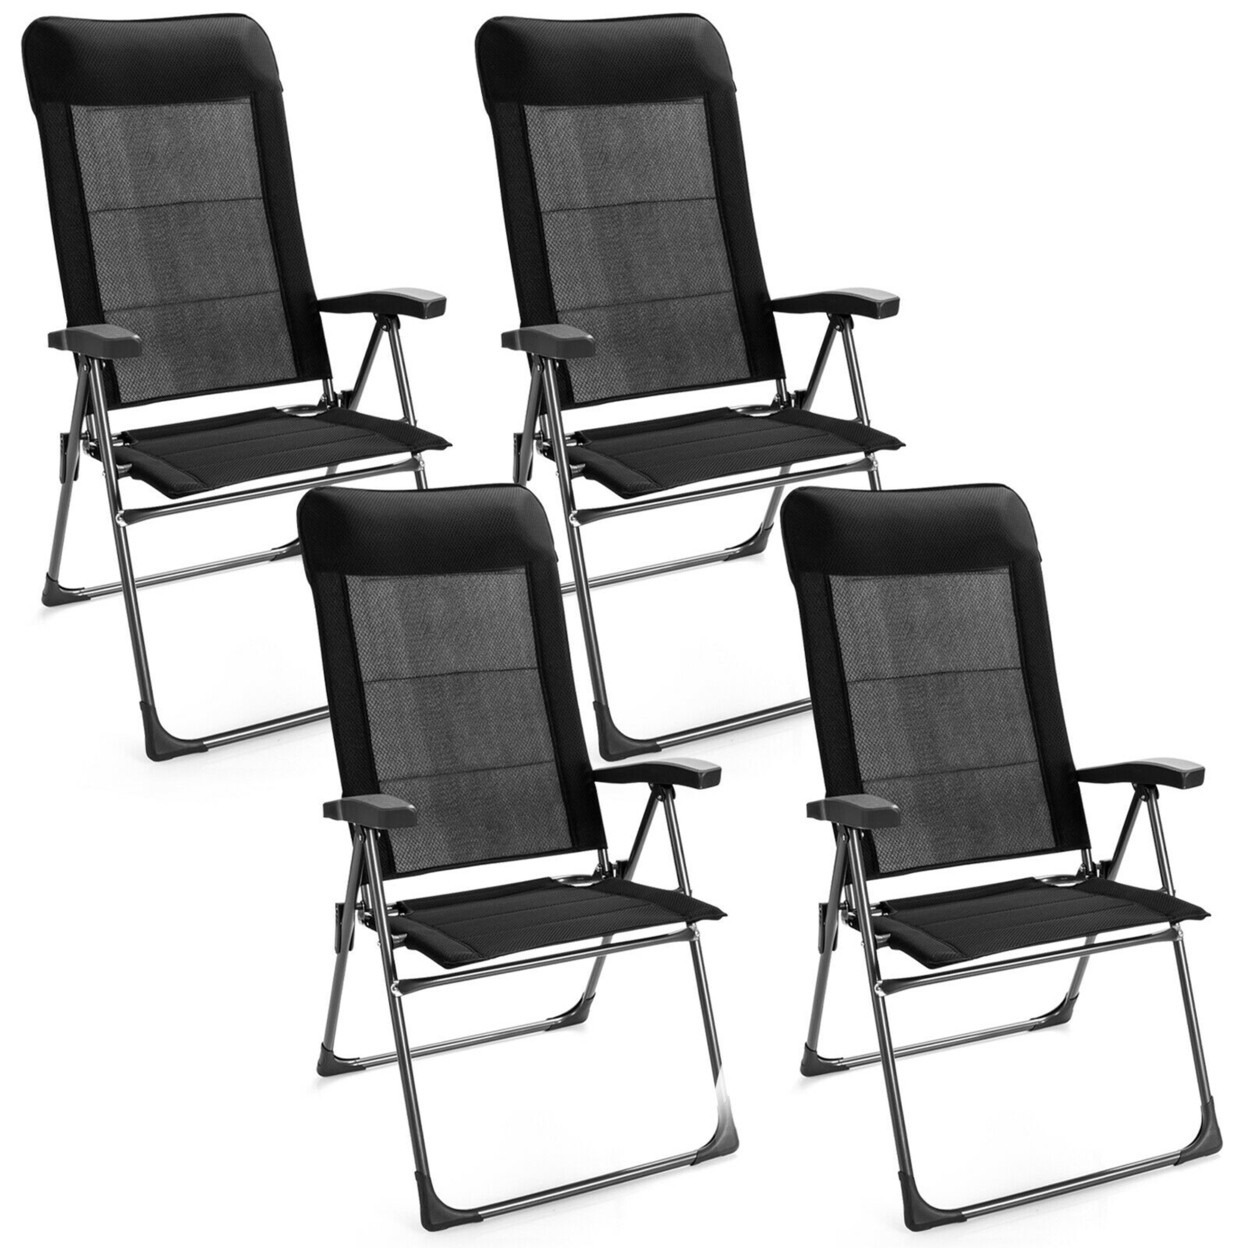 4PCS Patio Folding Dining Chairs Portable Camping Headrest Adjust Black